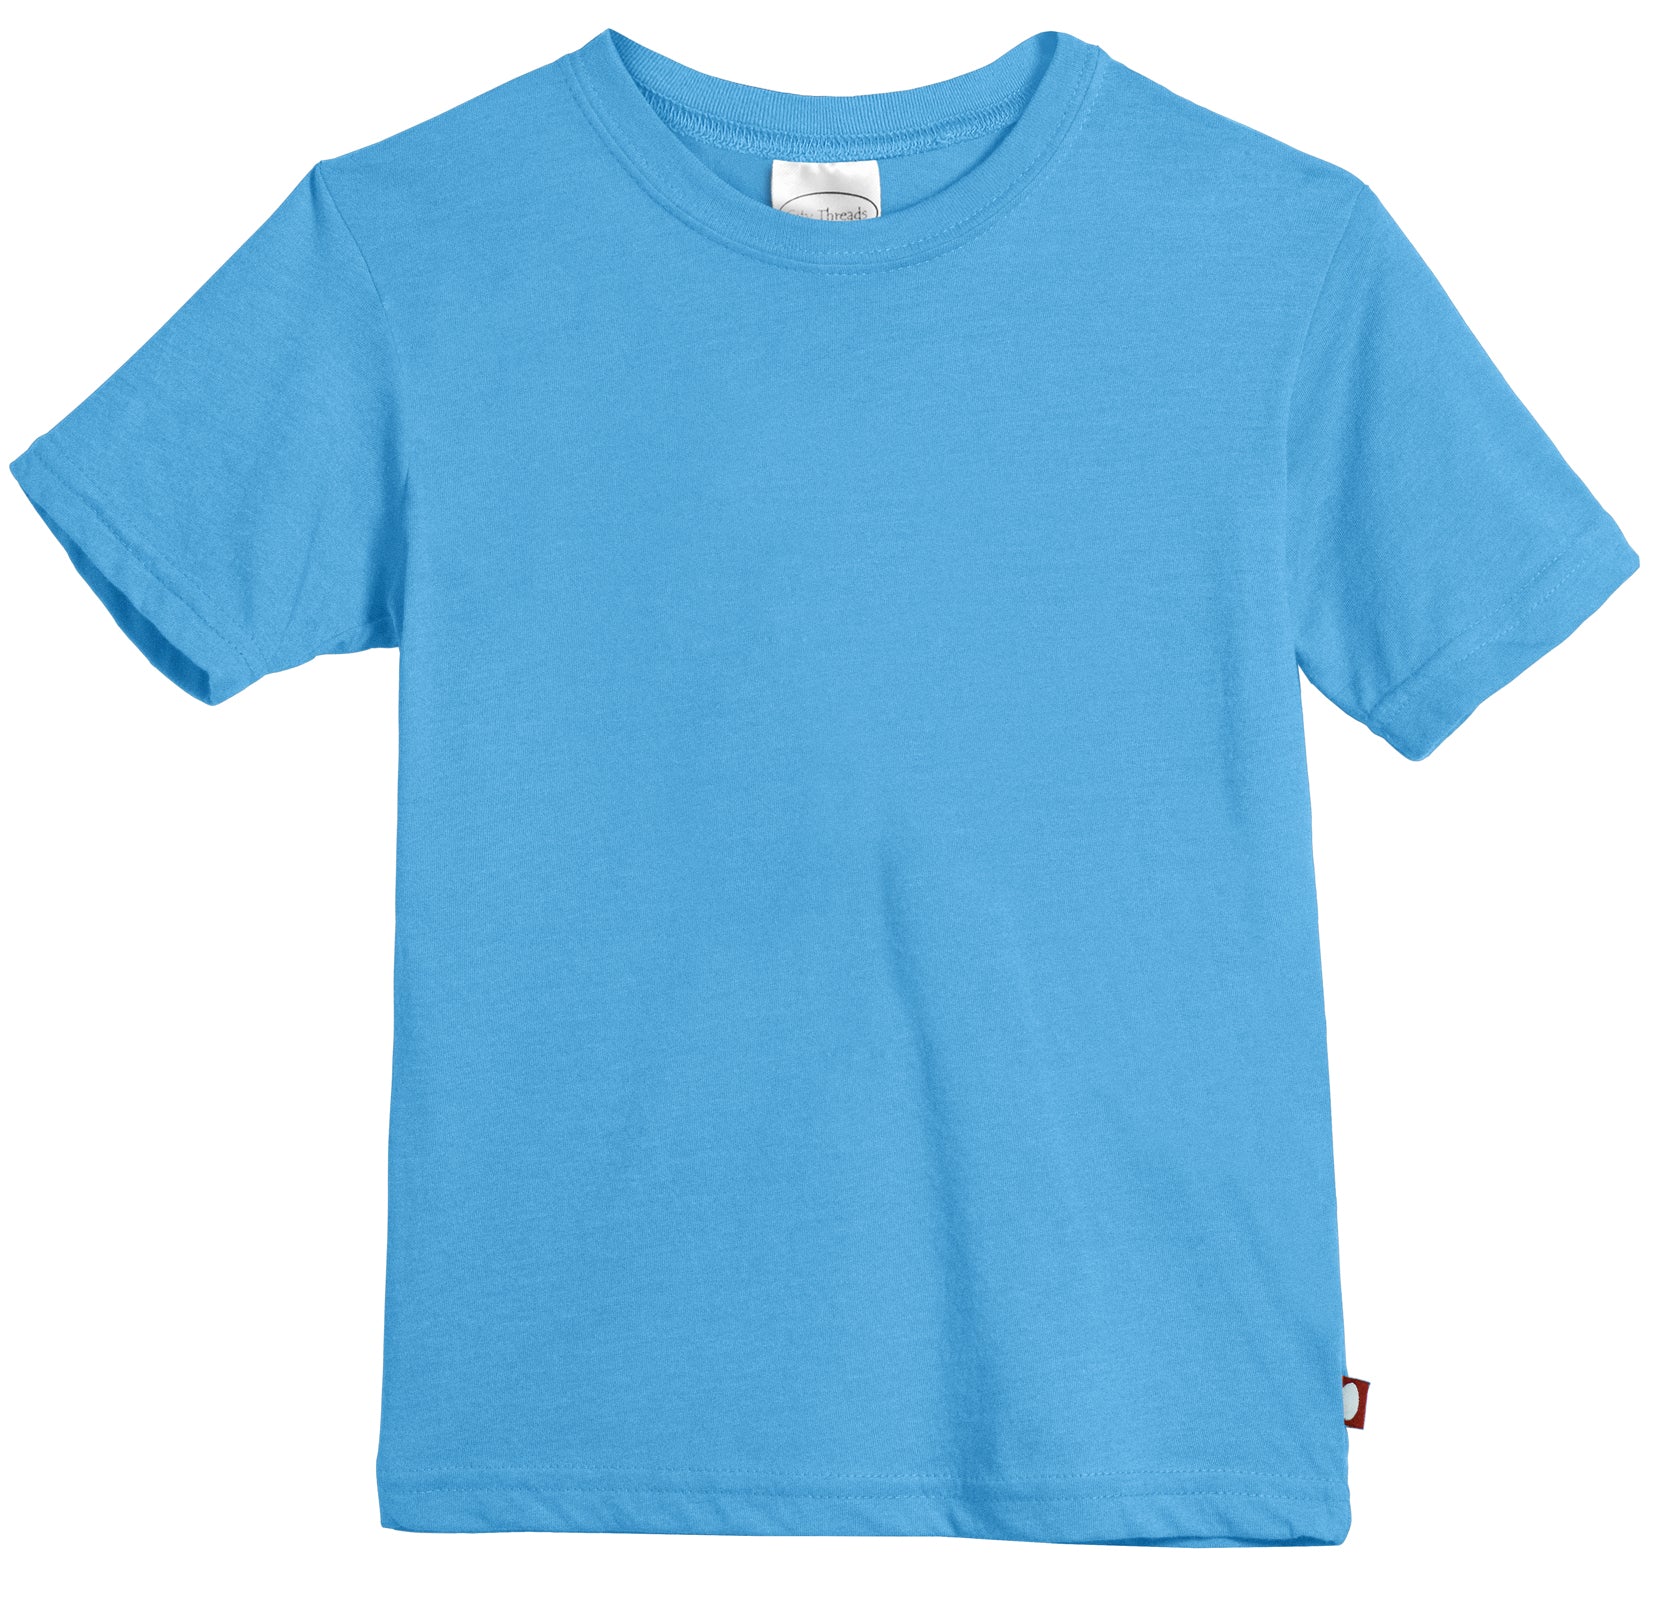 Cookies Blue Sky Navy & Light Blue Tie Dye T-Shirt